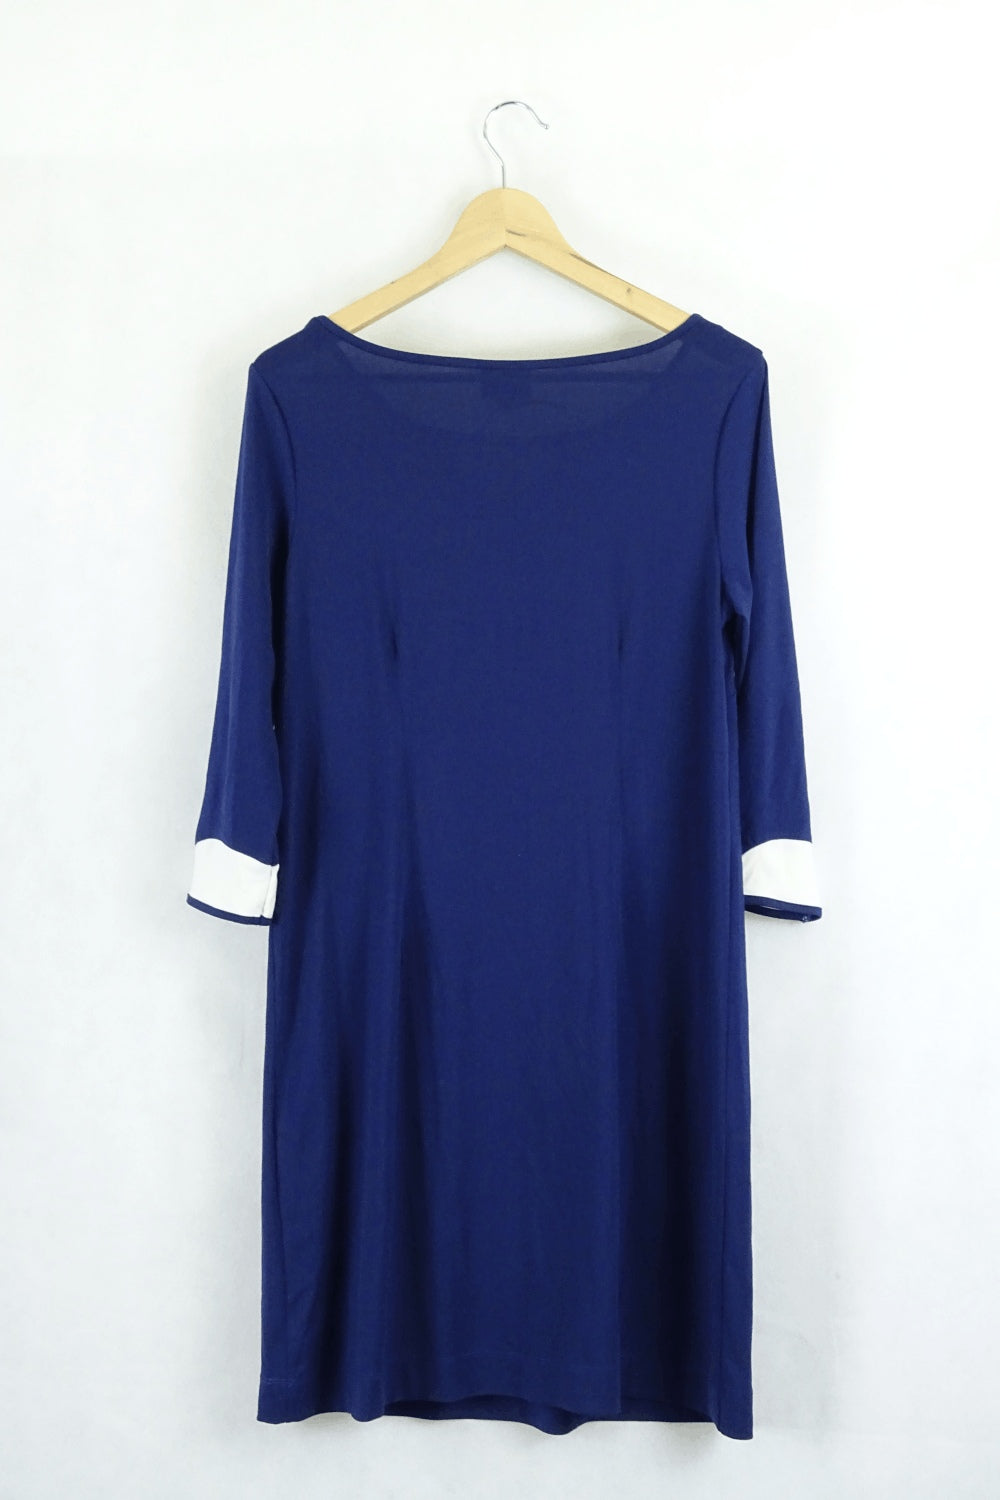 Leona Edmiston Blue And White Dress 1 (Au 10)